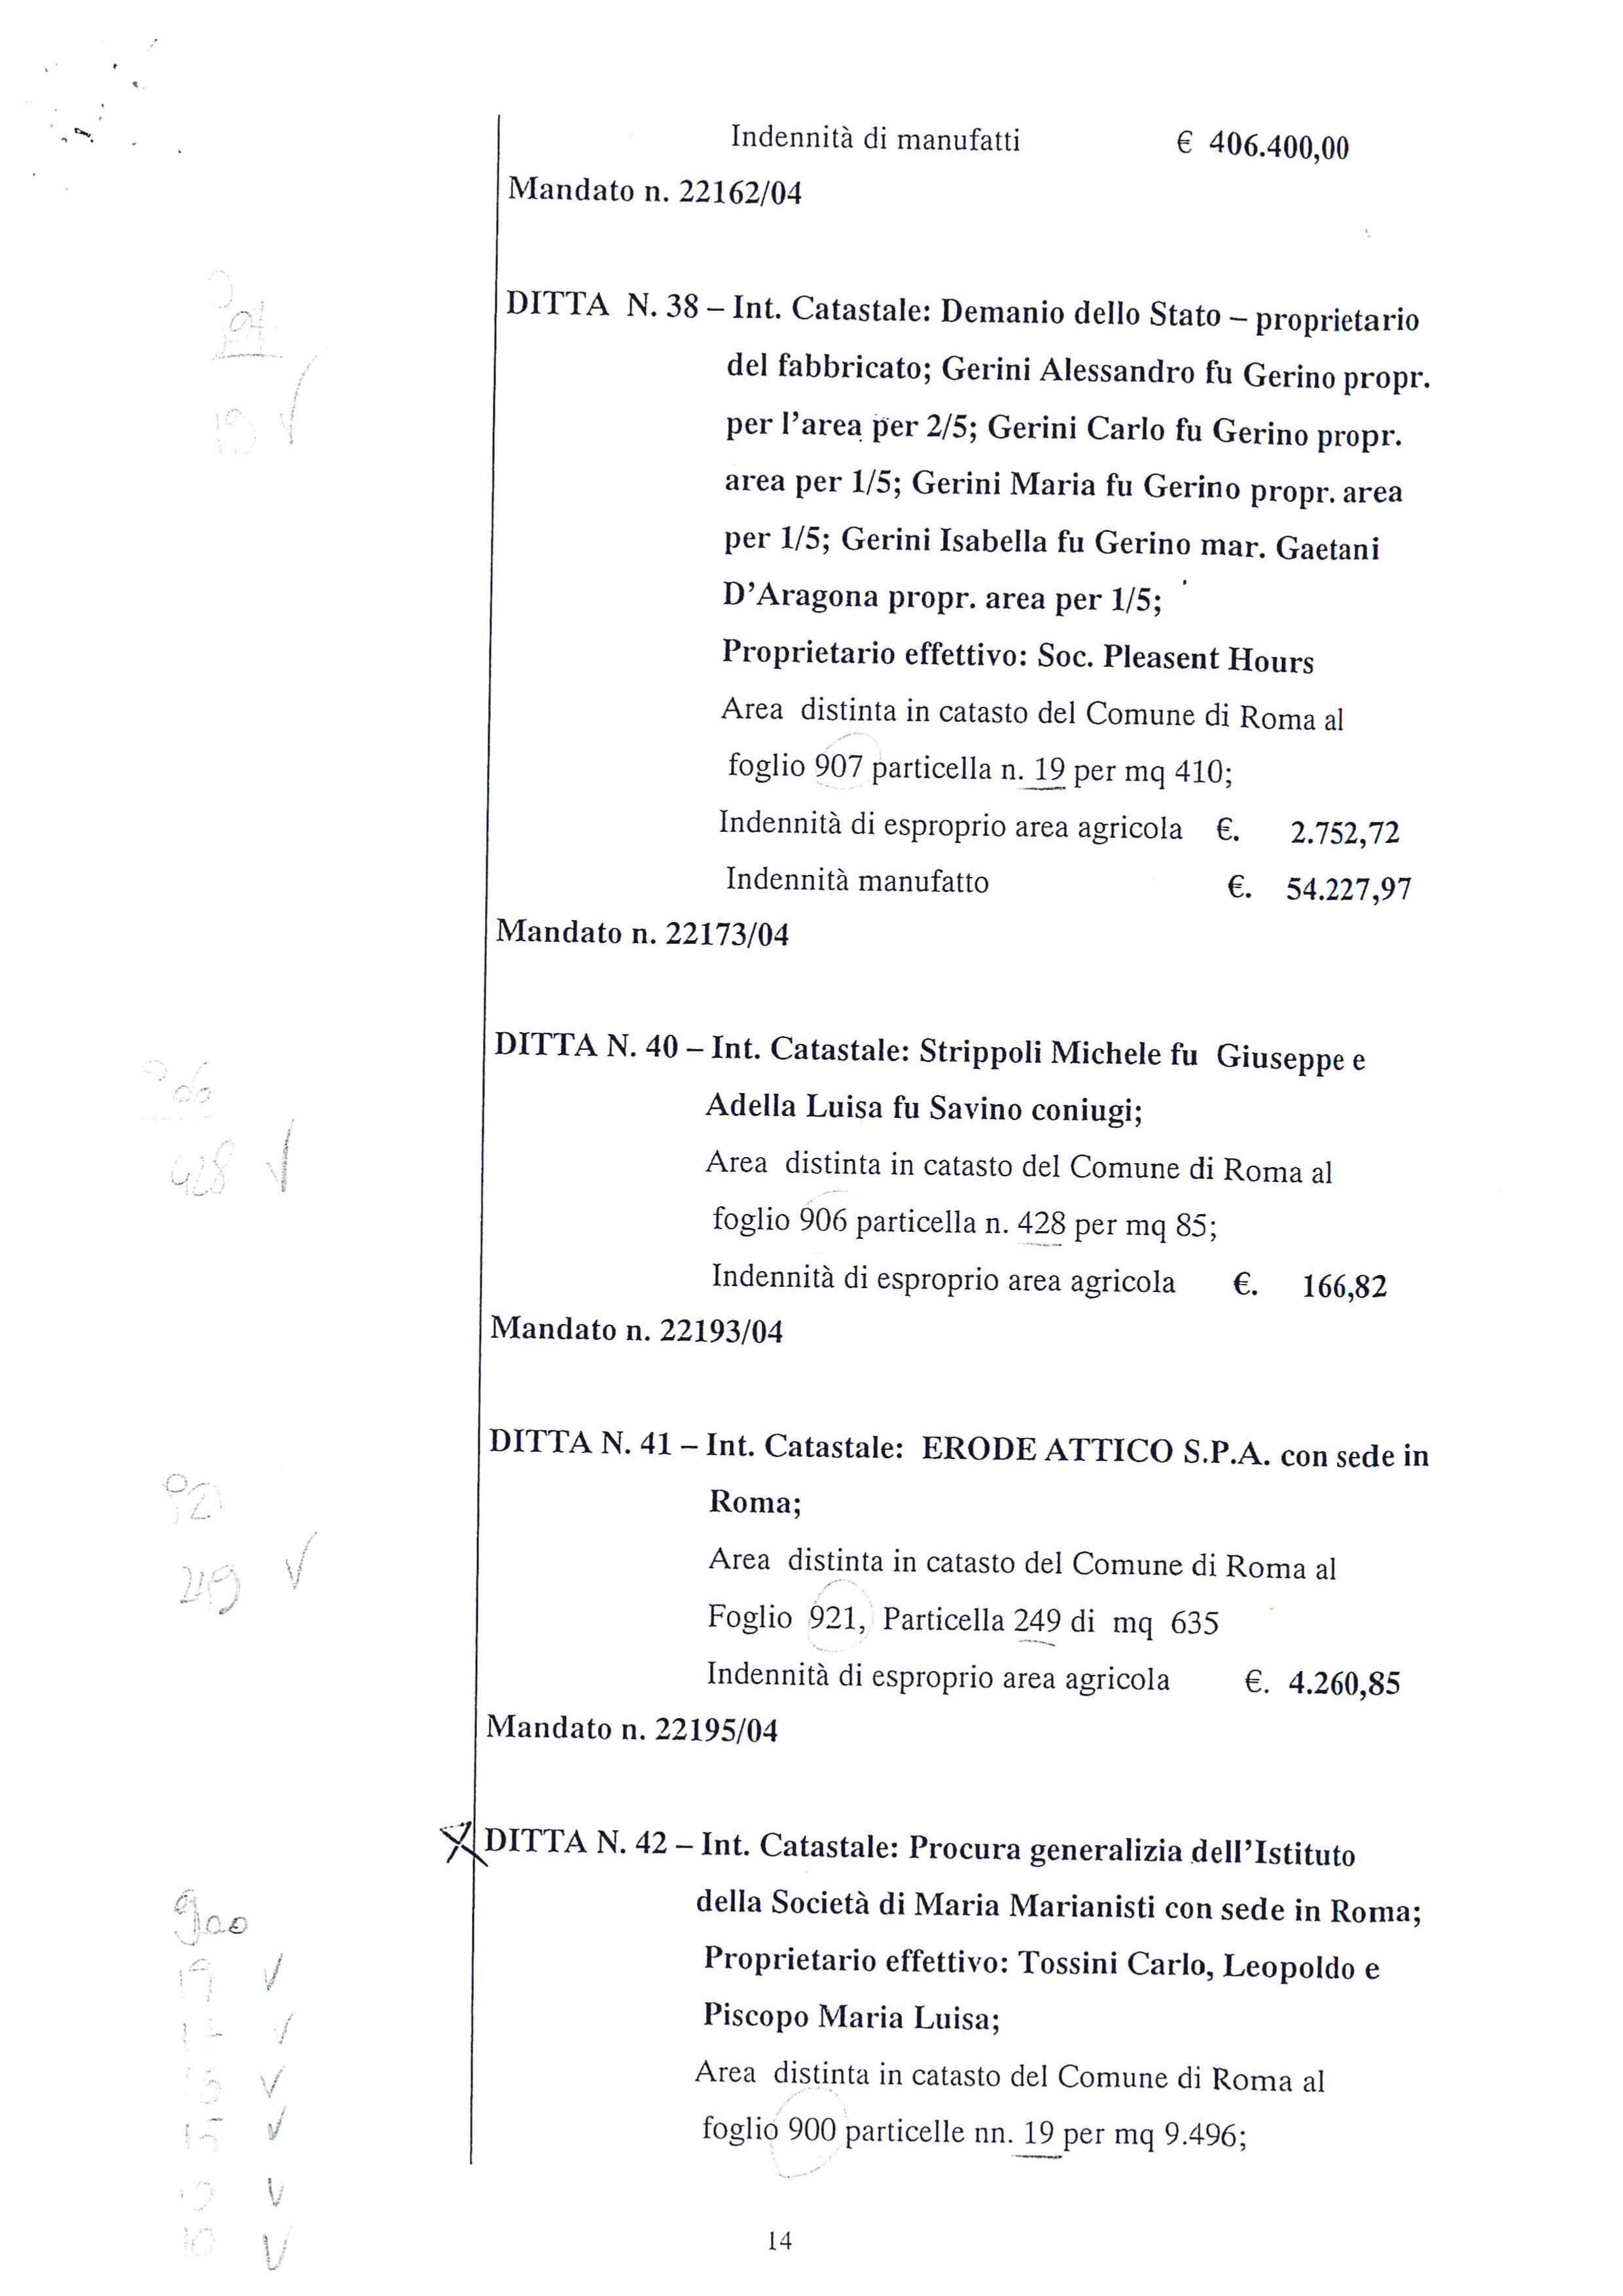 2005 Decreto esproprio Veltroni 5